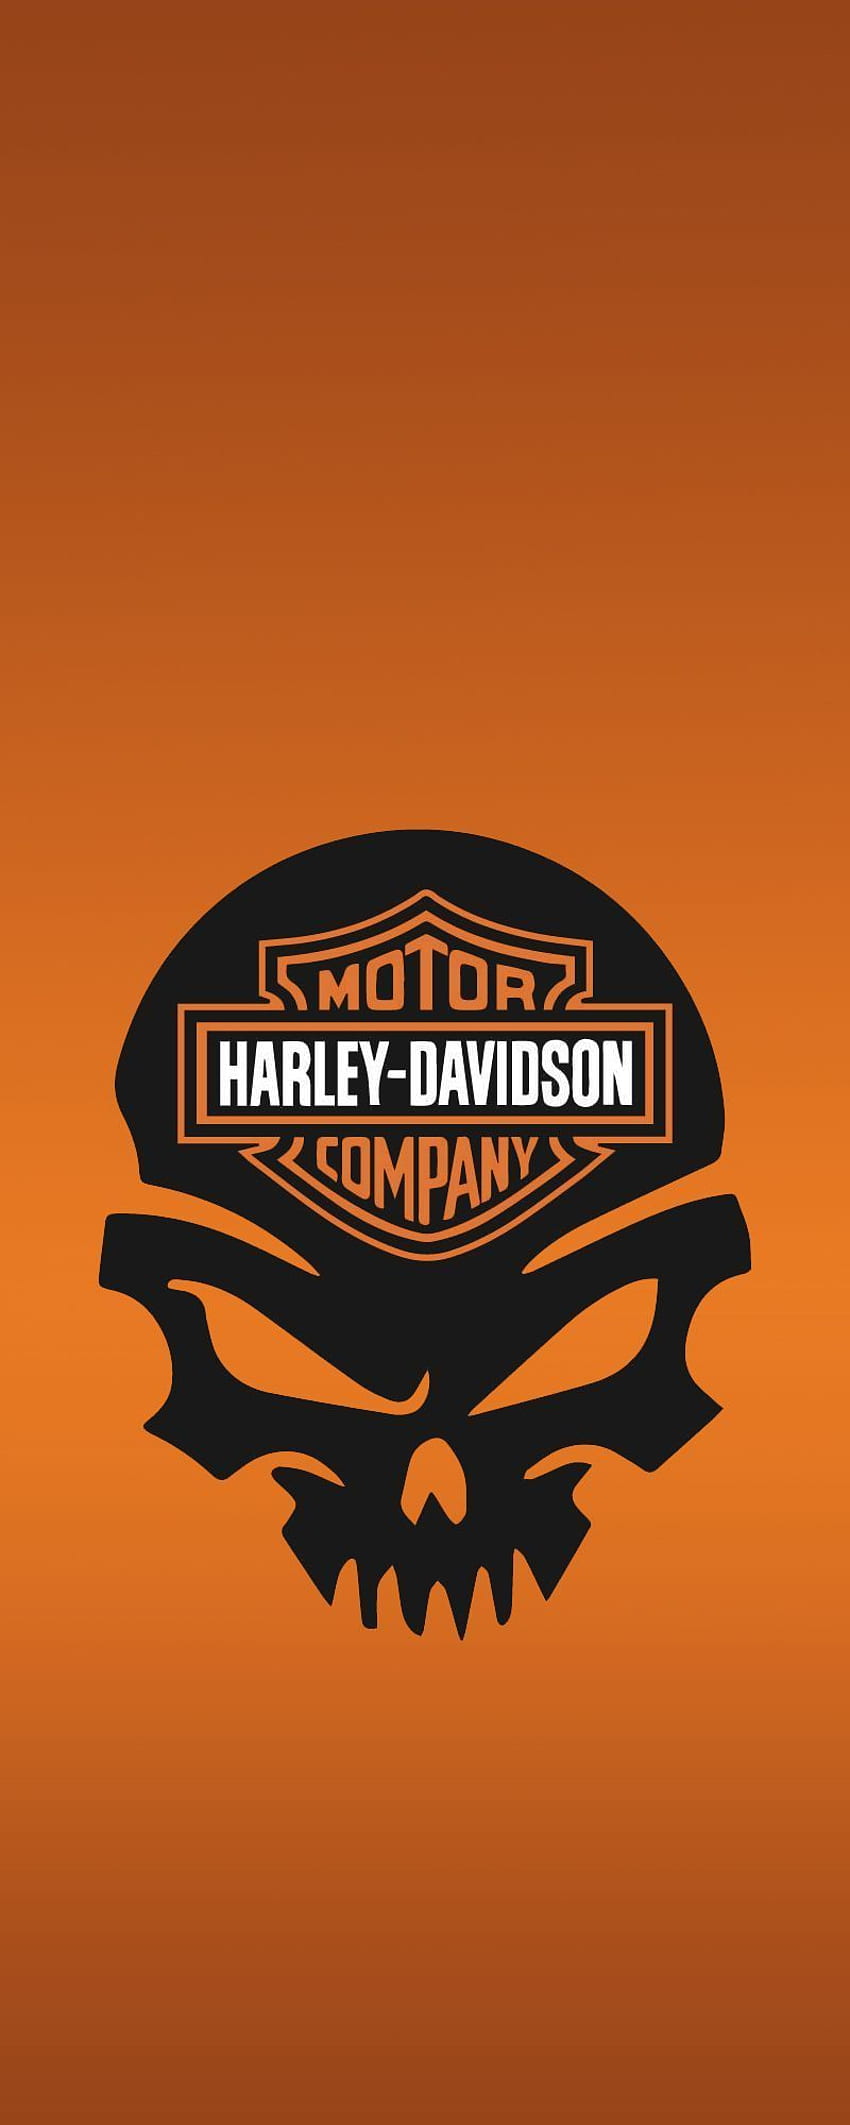 Harley Teléfono. Harley davidson, Harley davidson stickers, Harley davidson artwork fondo de pantalla del teléfono